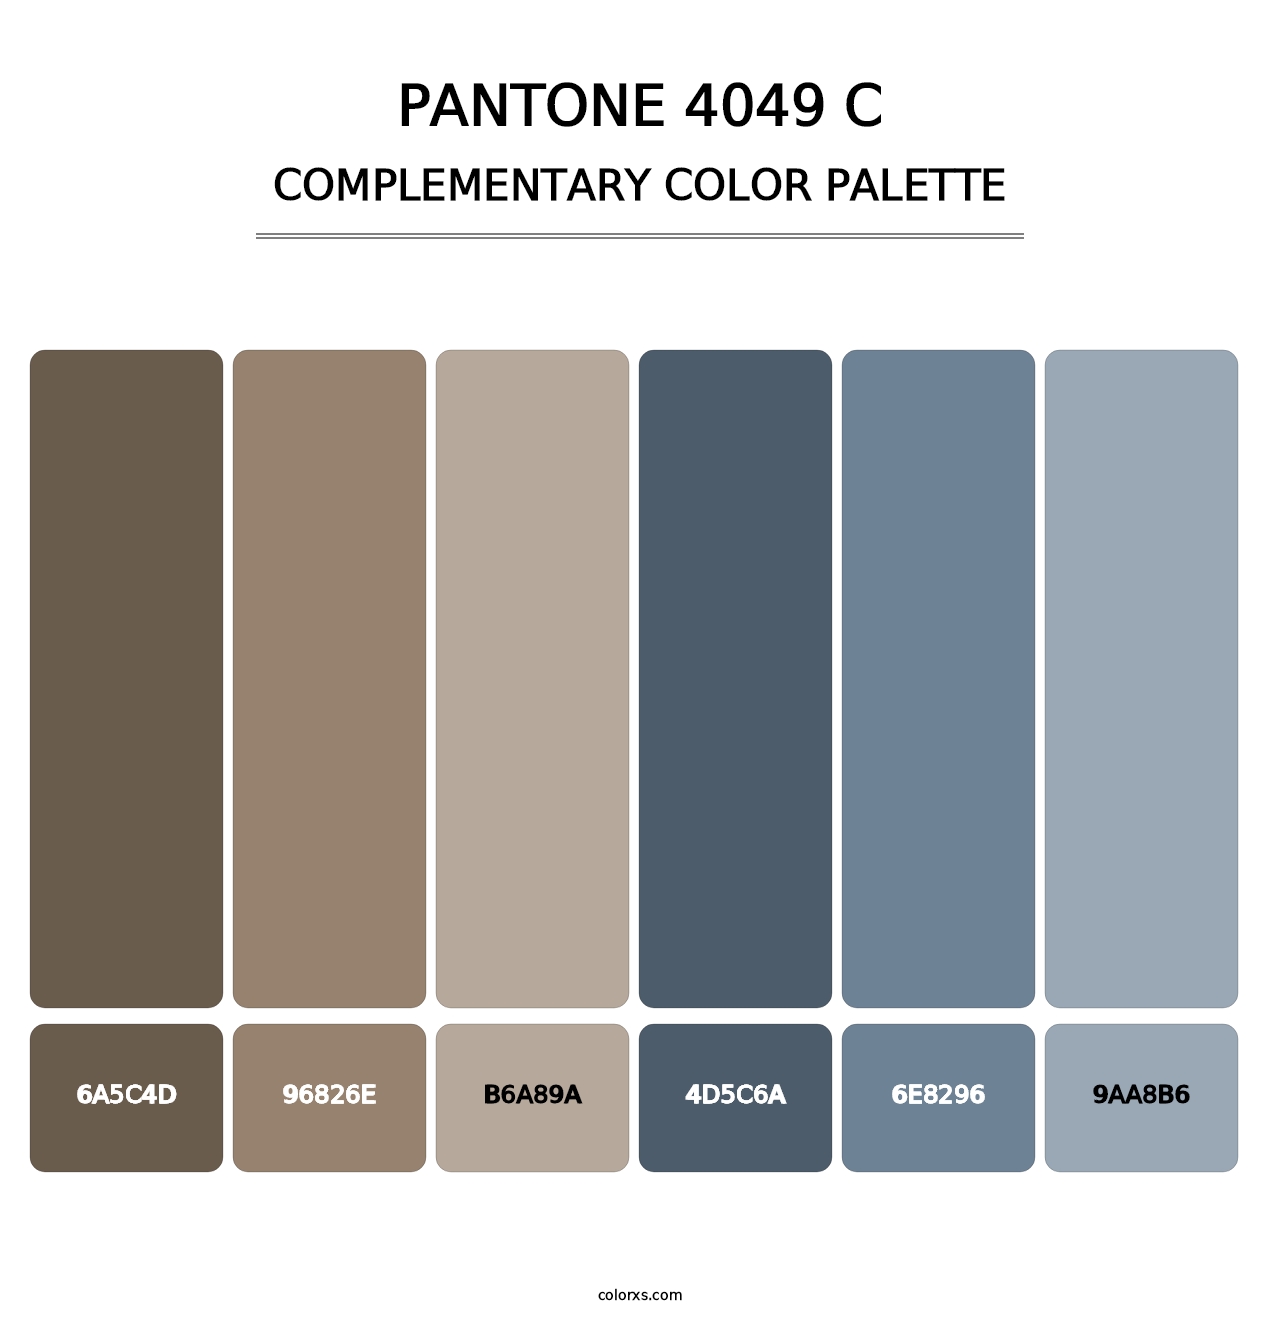 PANTONE 4049 C - Complementary Color Palette